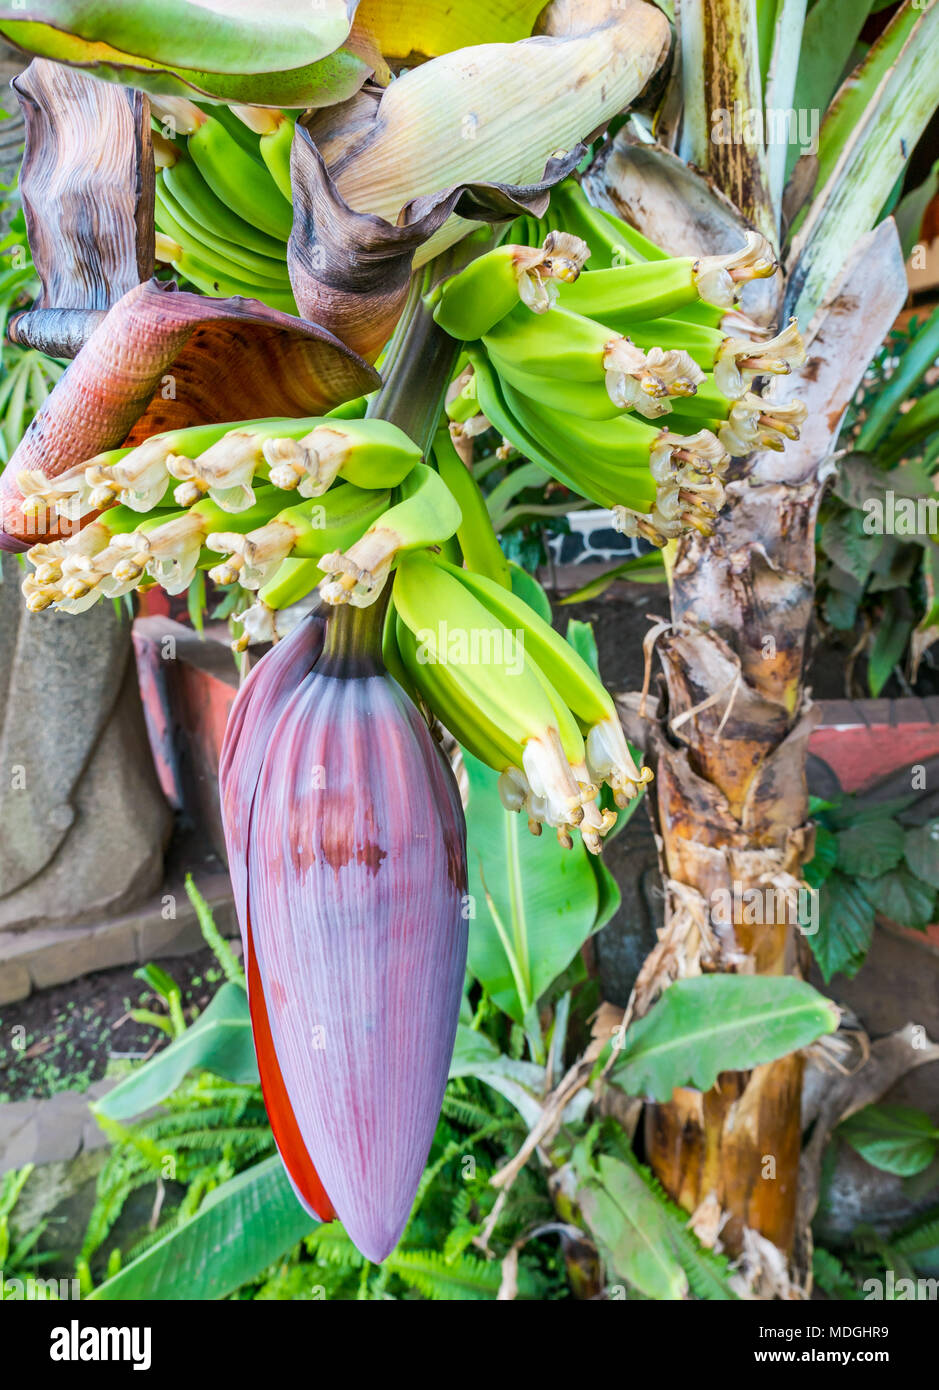 Close up of large banana flower and bananas growing on banana plant, Hanga Roa, Easter Island, Pacific, Chile Stock Photo